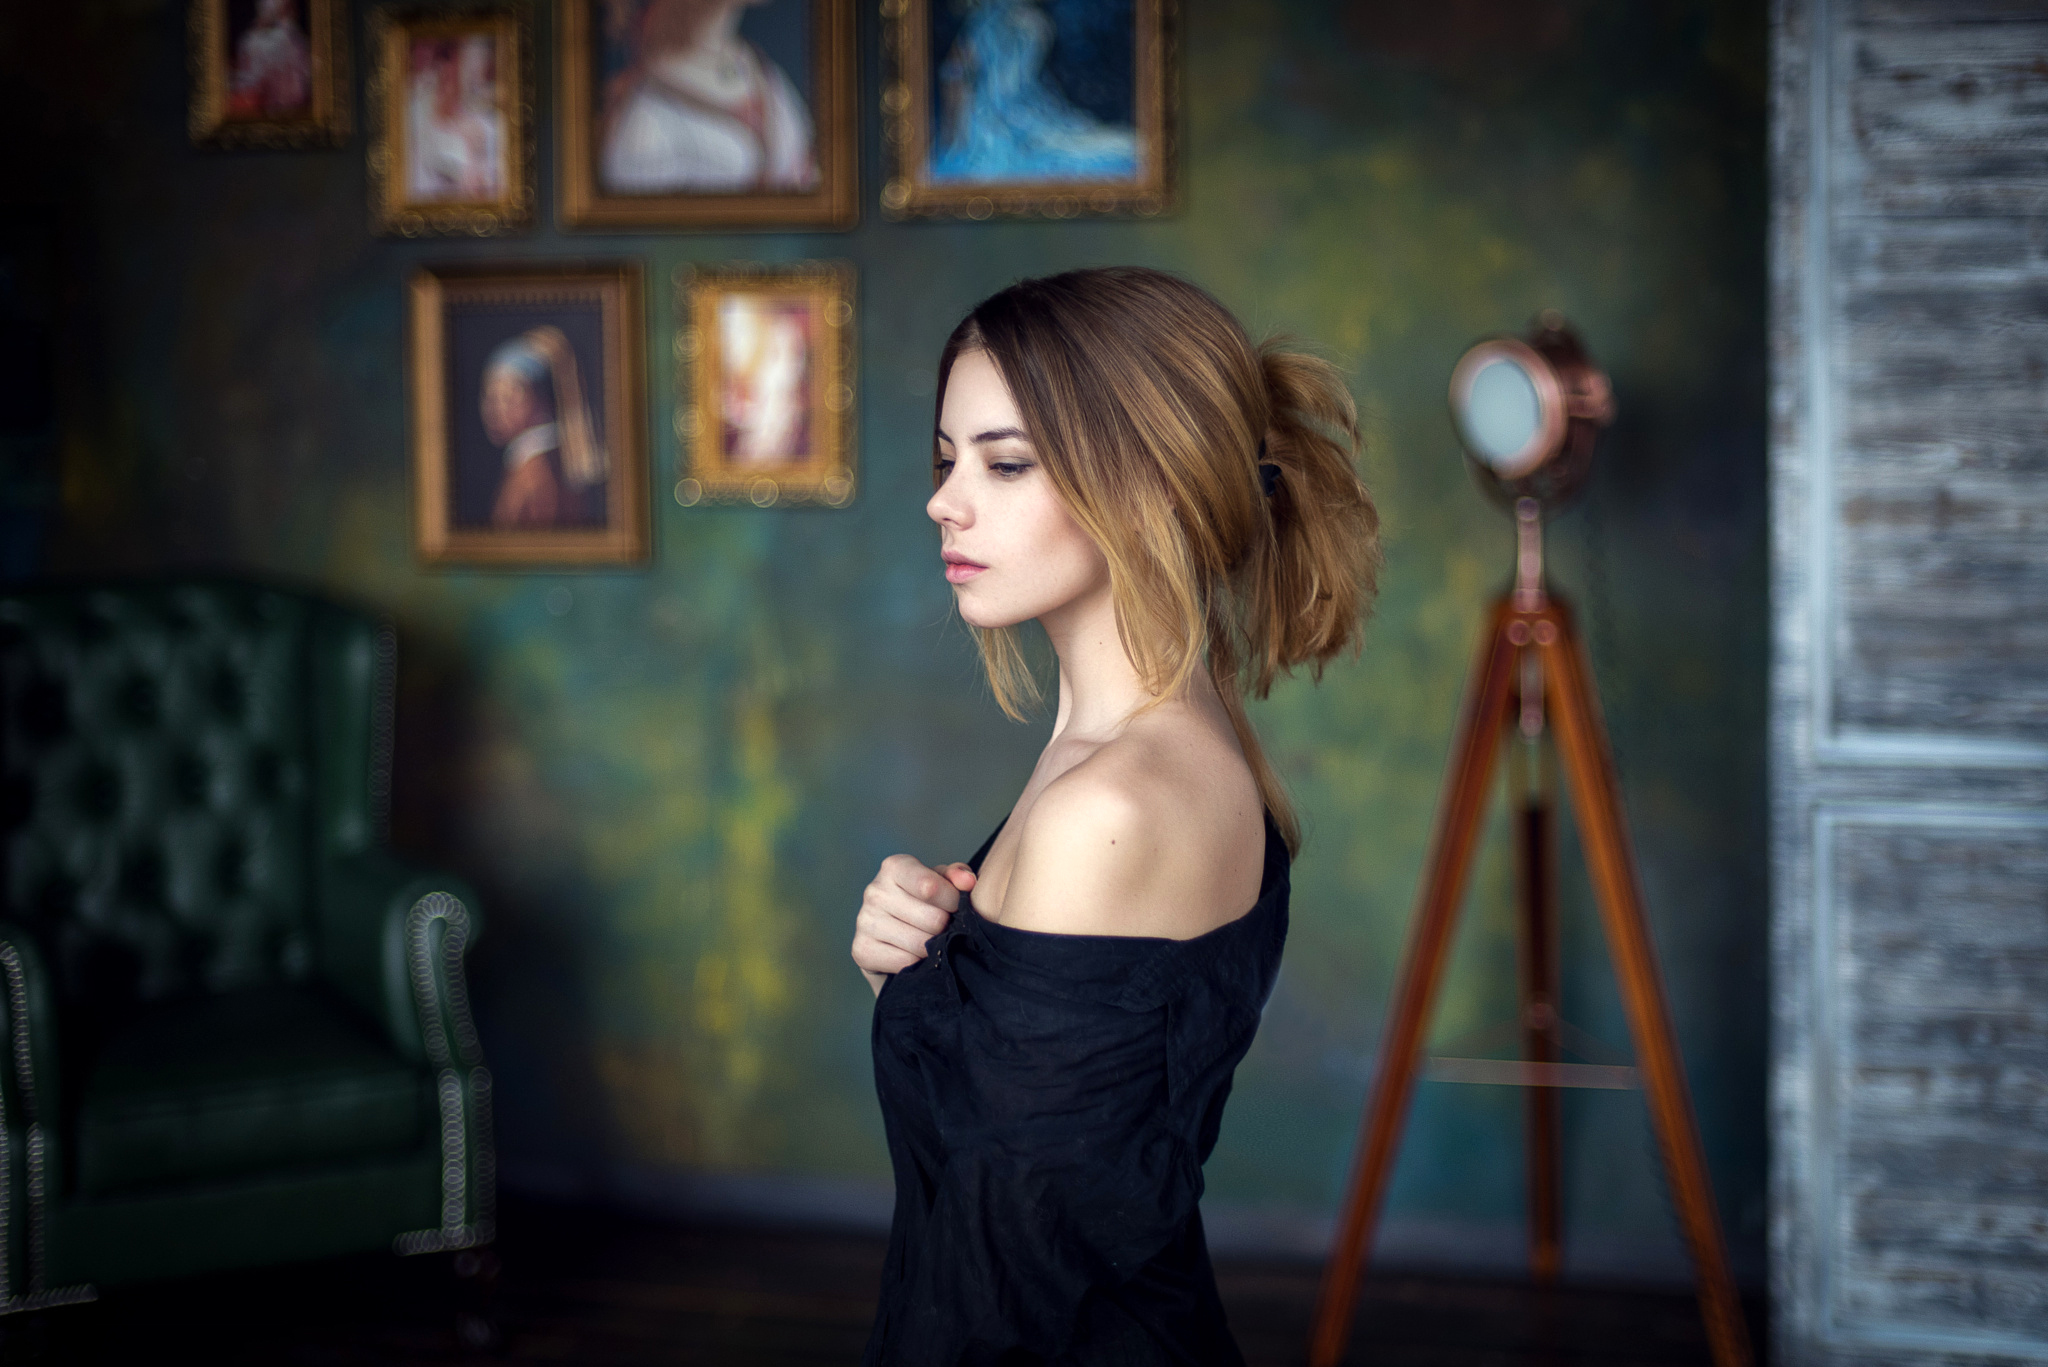 women, model, interior, portrait